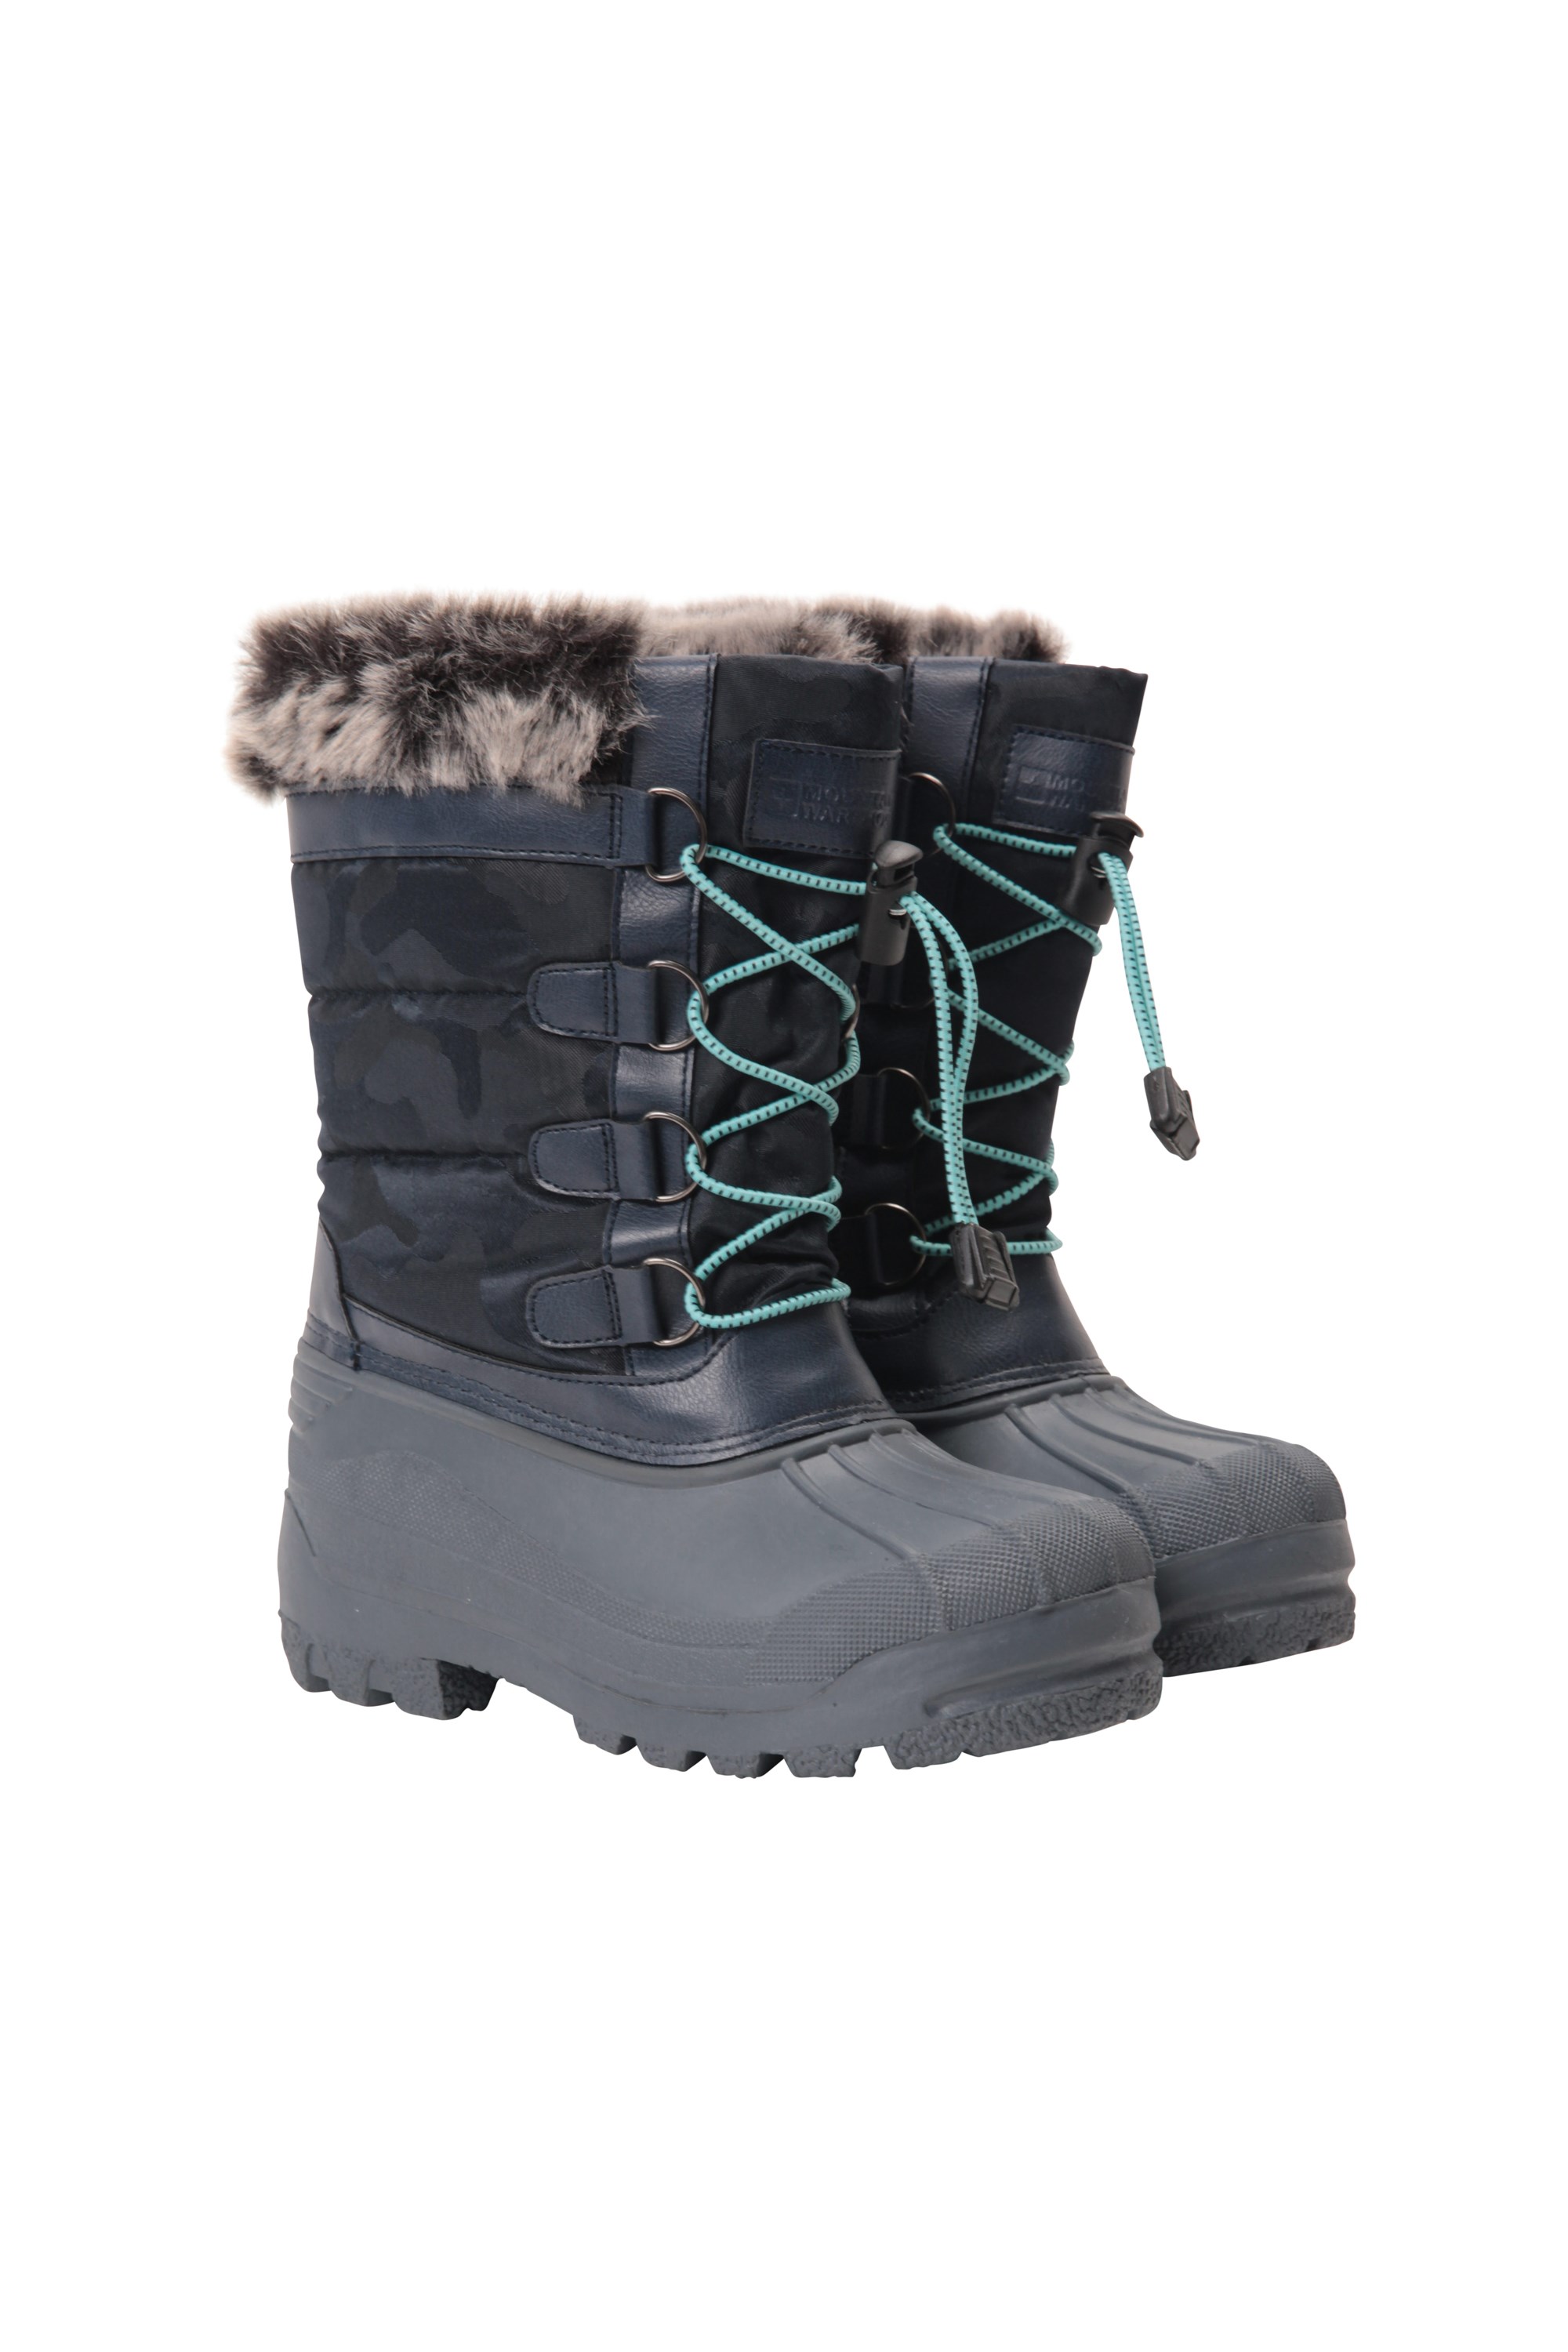 mountain warehouse kids snow boots